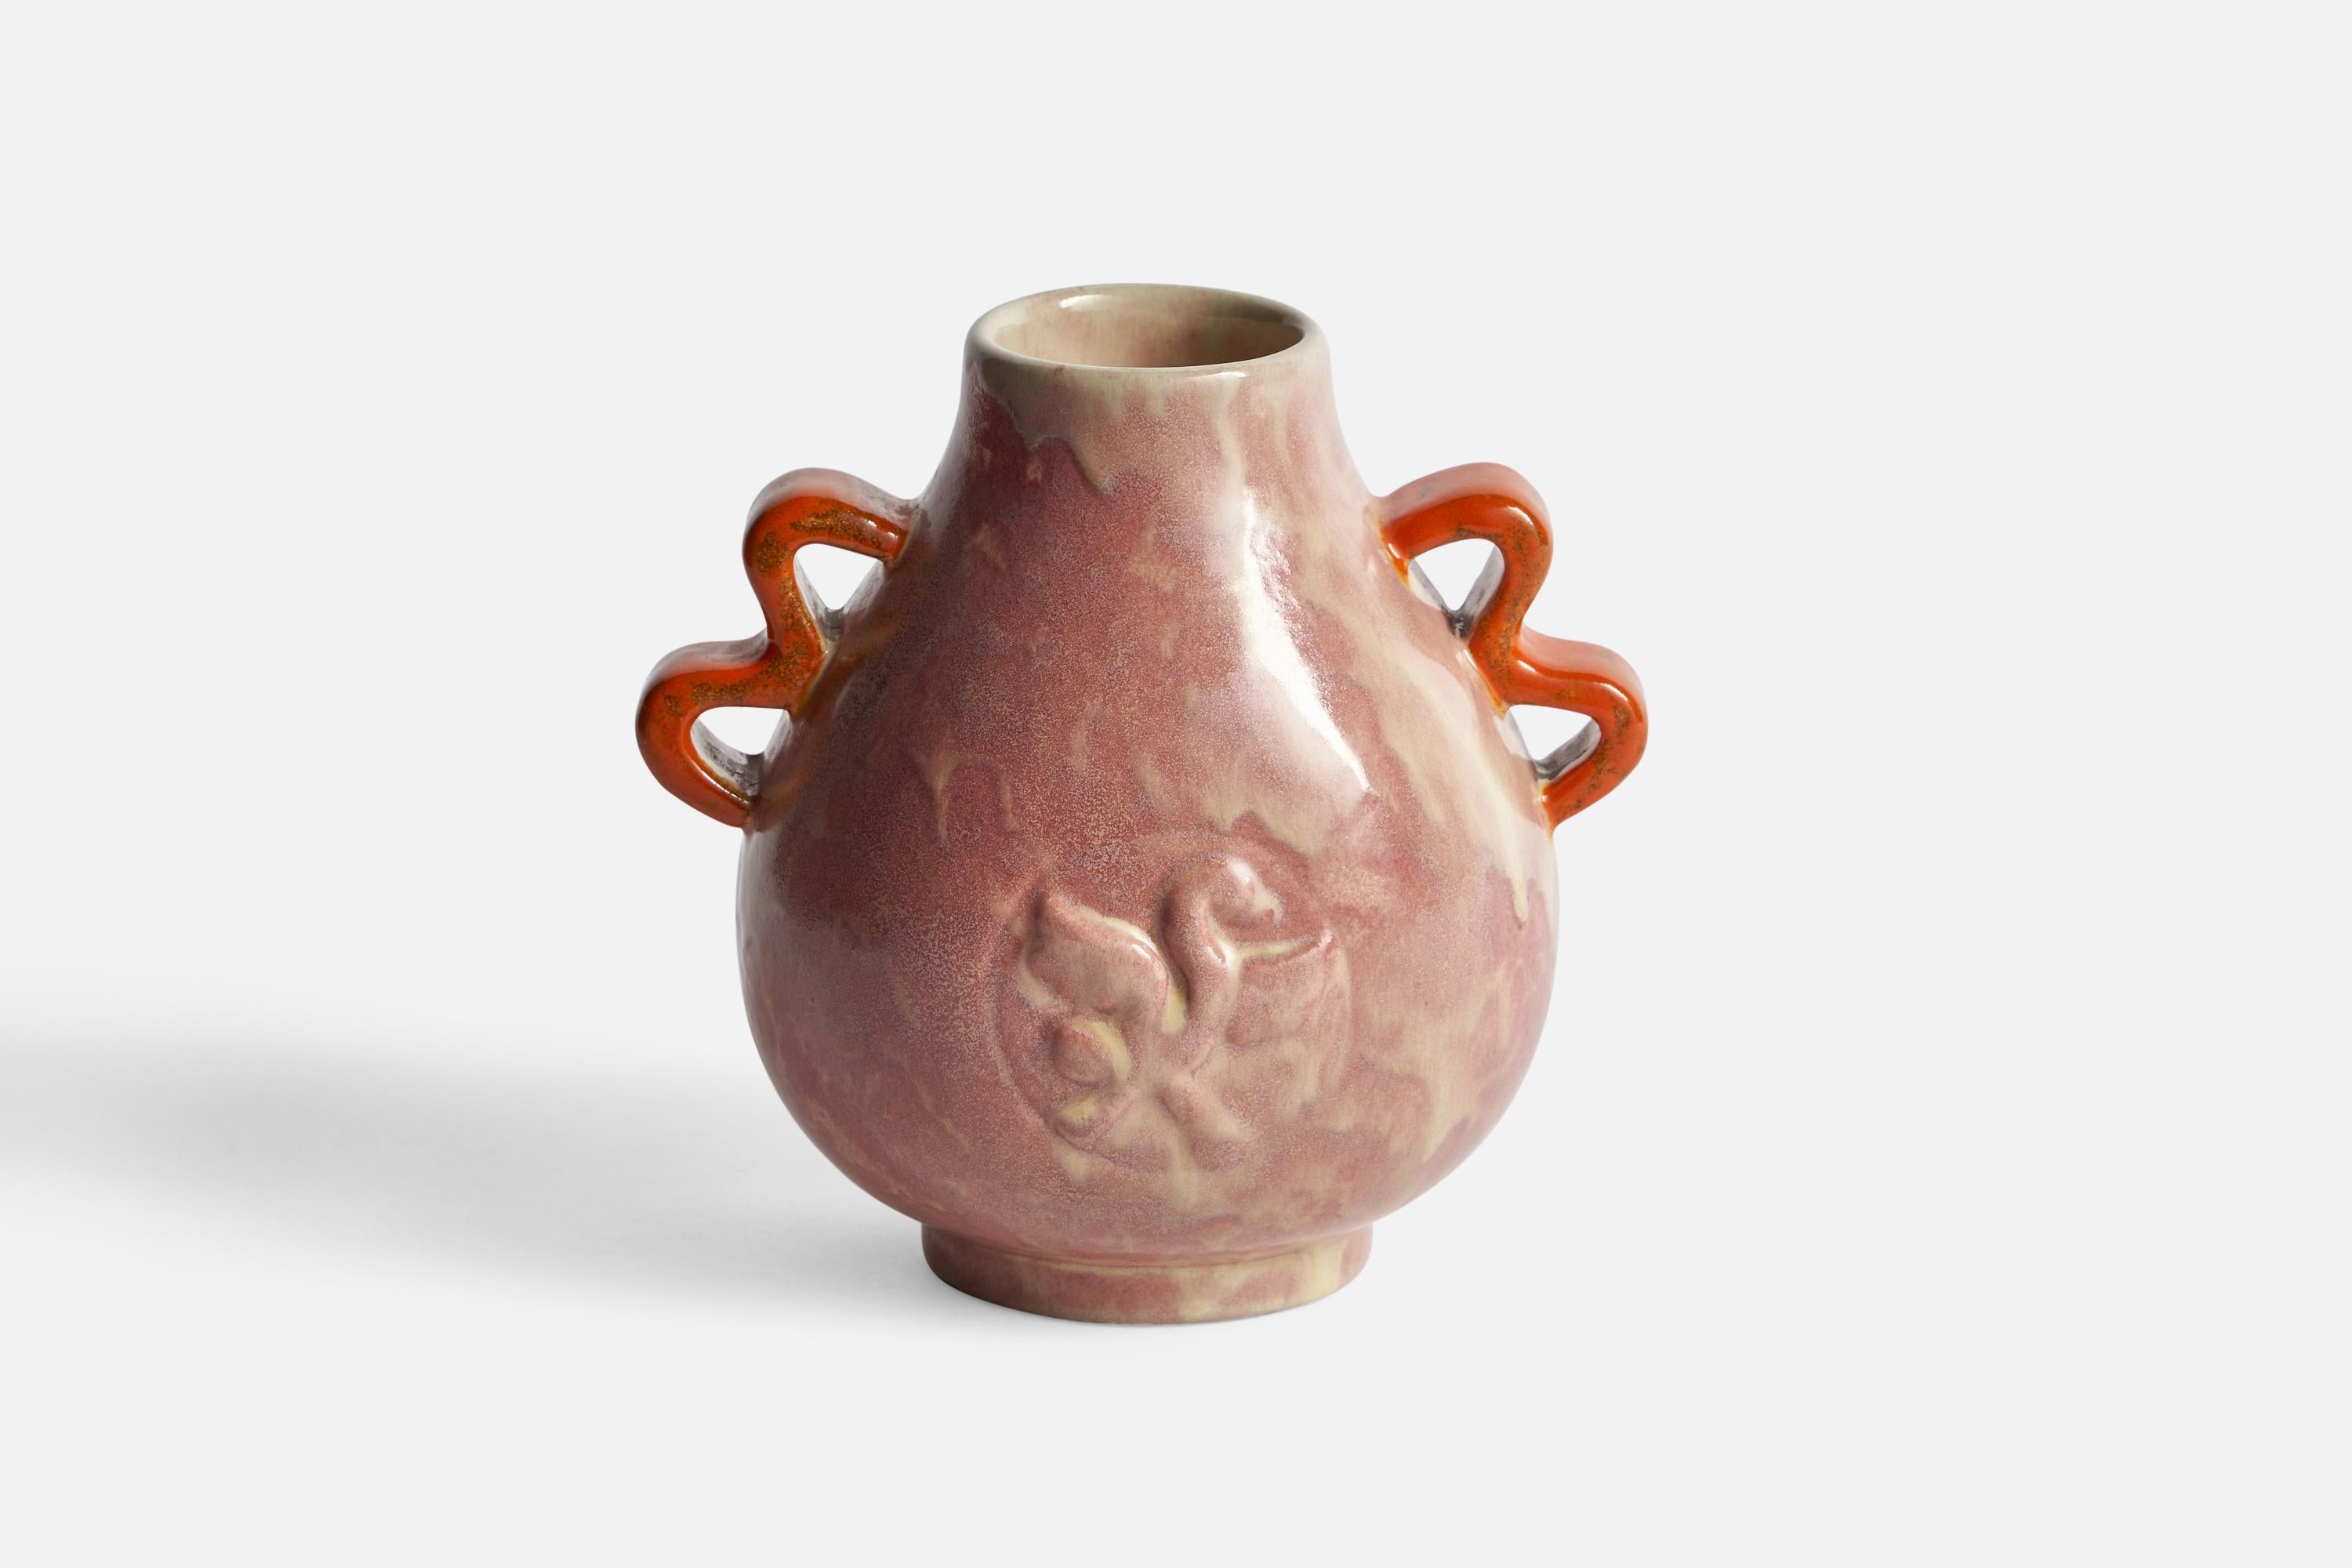 A pink and orange-glazed earthenware vase designed and produced by Upsala Ekeby, Sweden, 1930s.